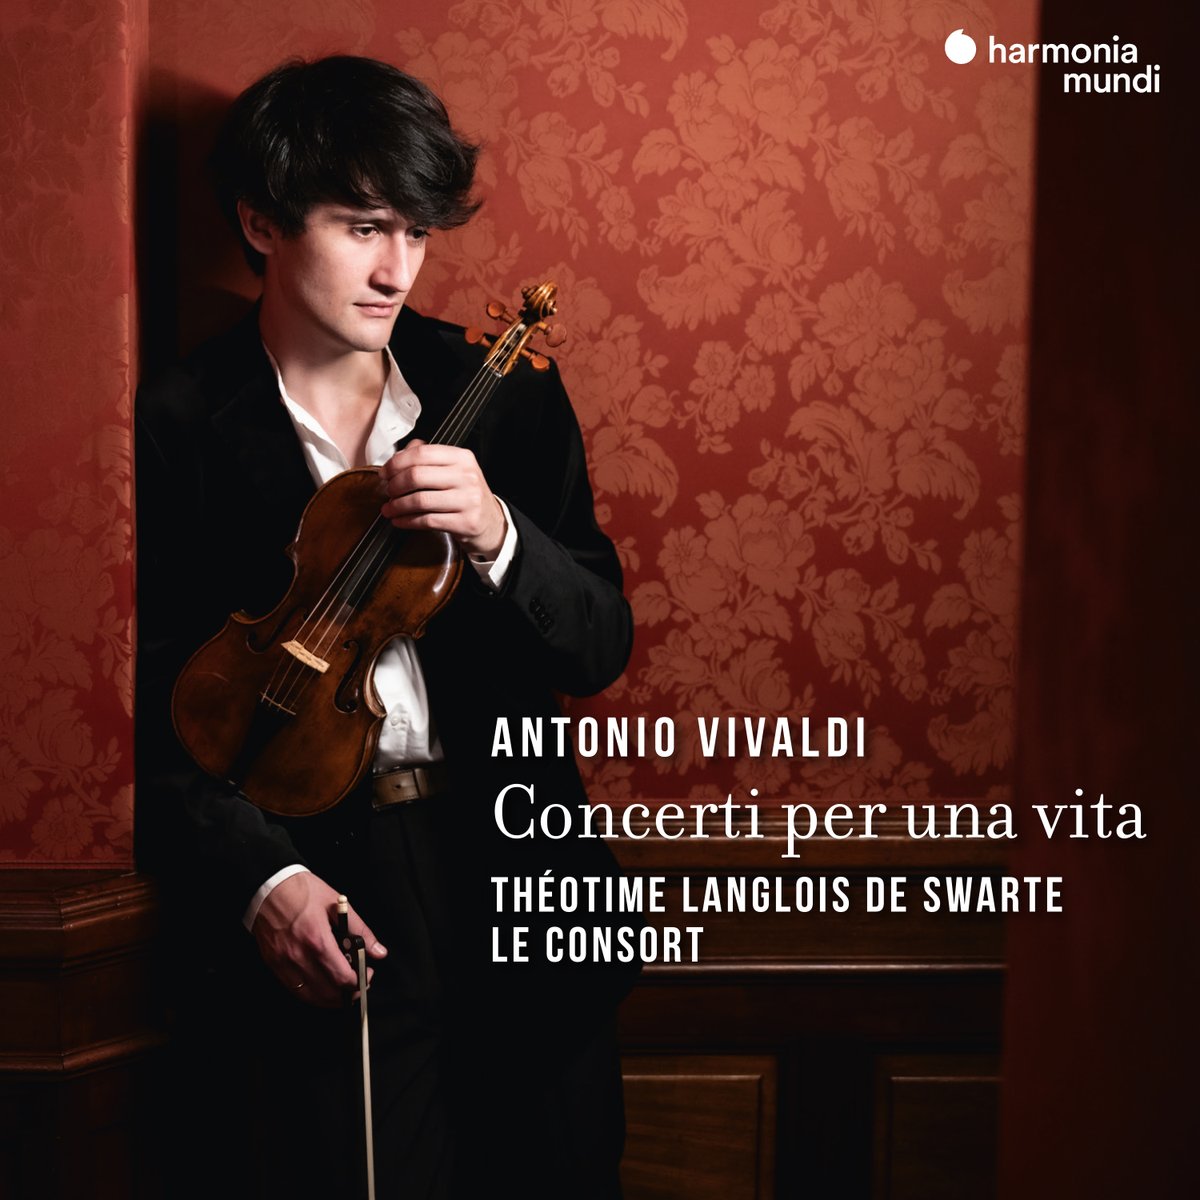 [NEW RELEASE] 🎻 Antonio Vivaldi Concerti per una vita @theotimeviolin @LeConsort 👂 Listen: lnk.to/VivaldiConcert… 👉Teaser on YouTube: youtu.be/iflBqK2q_Rw